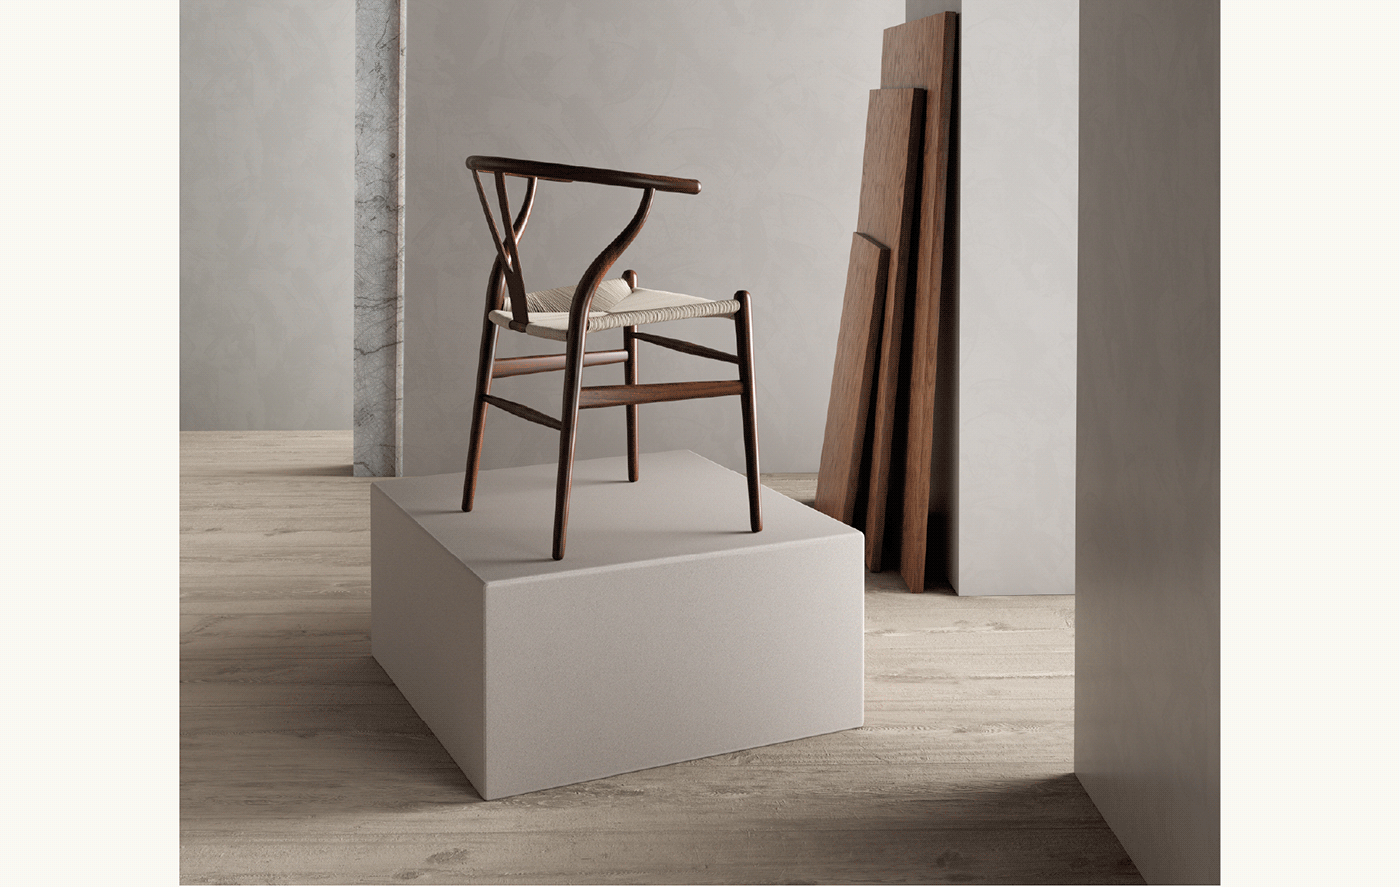 3ds max adobe illustrator Adobe Photoshop chair corona furniture interior design  product Render wood